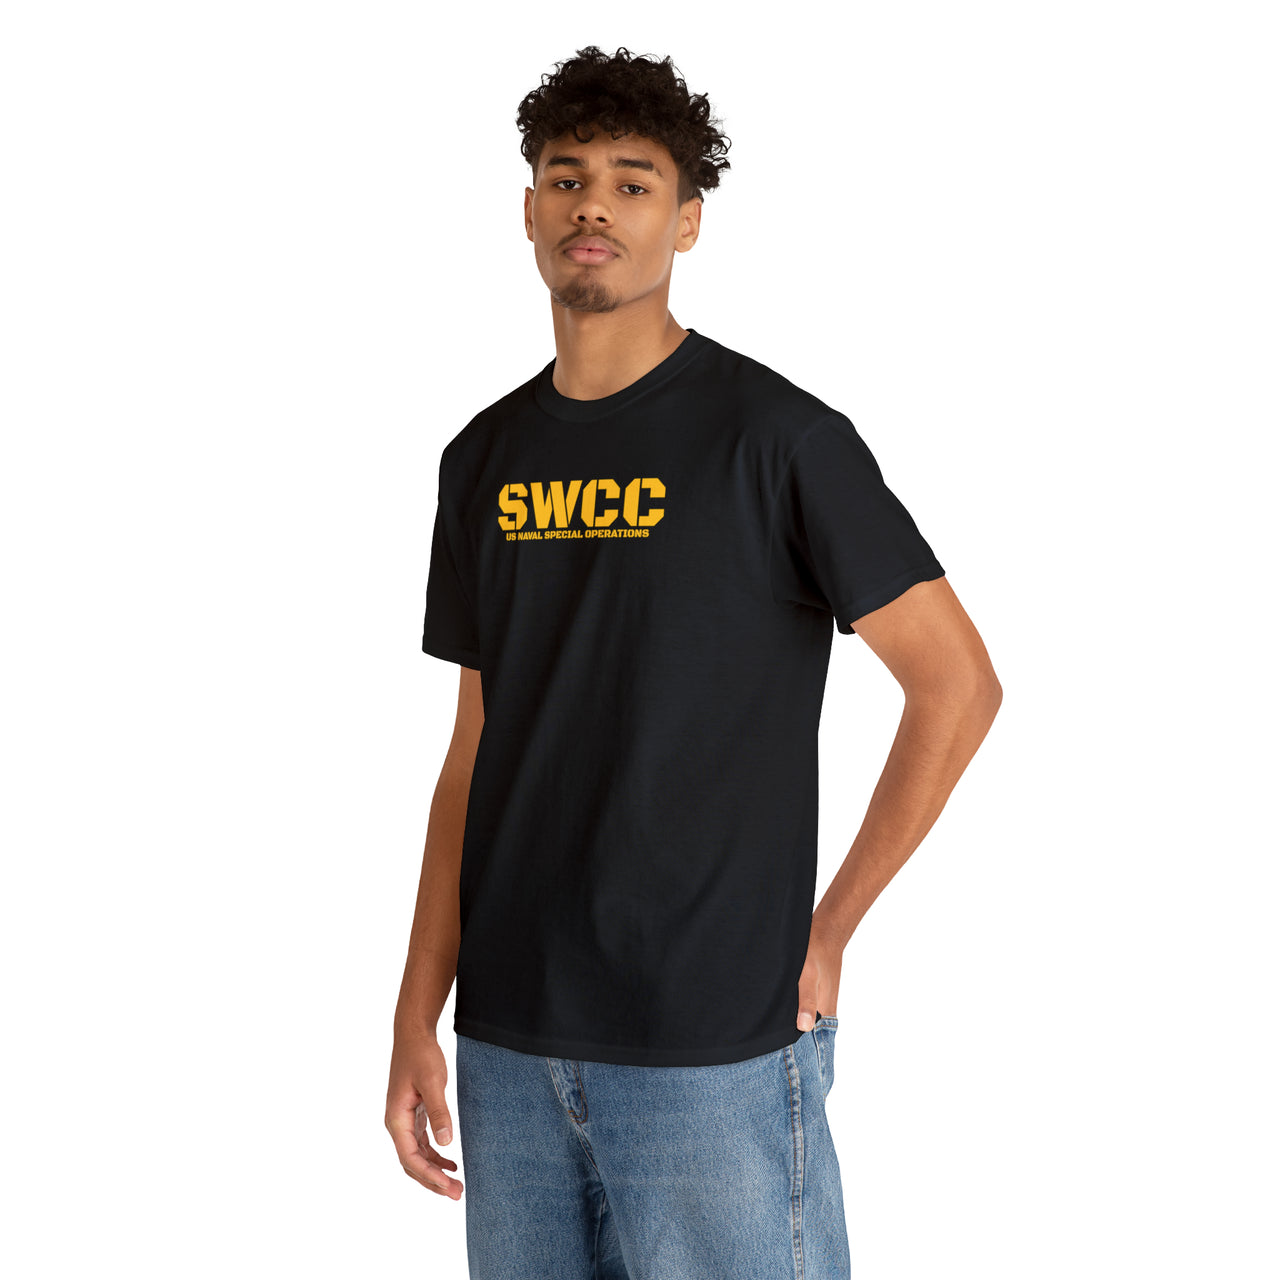 SWCC - Basic (Gold)